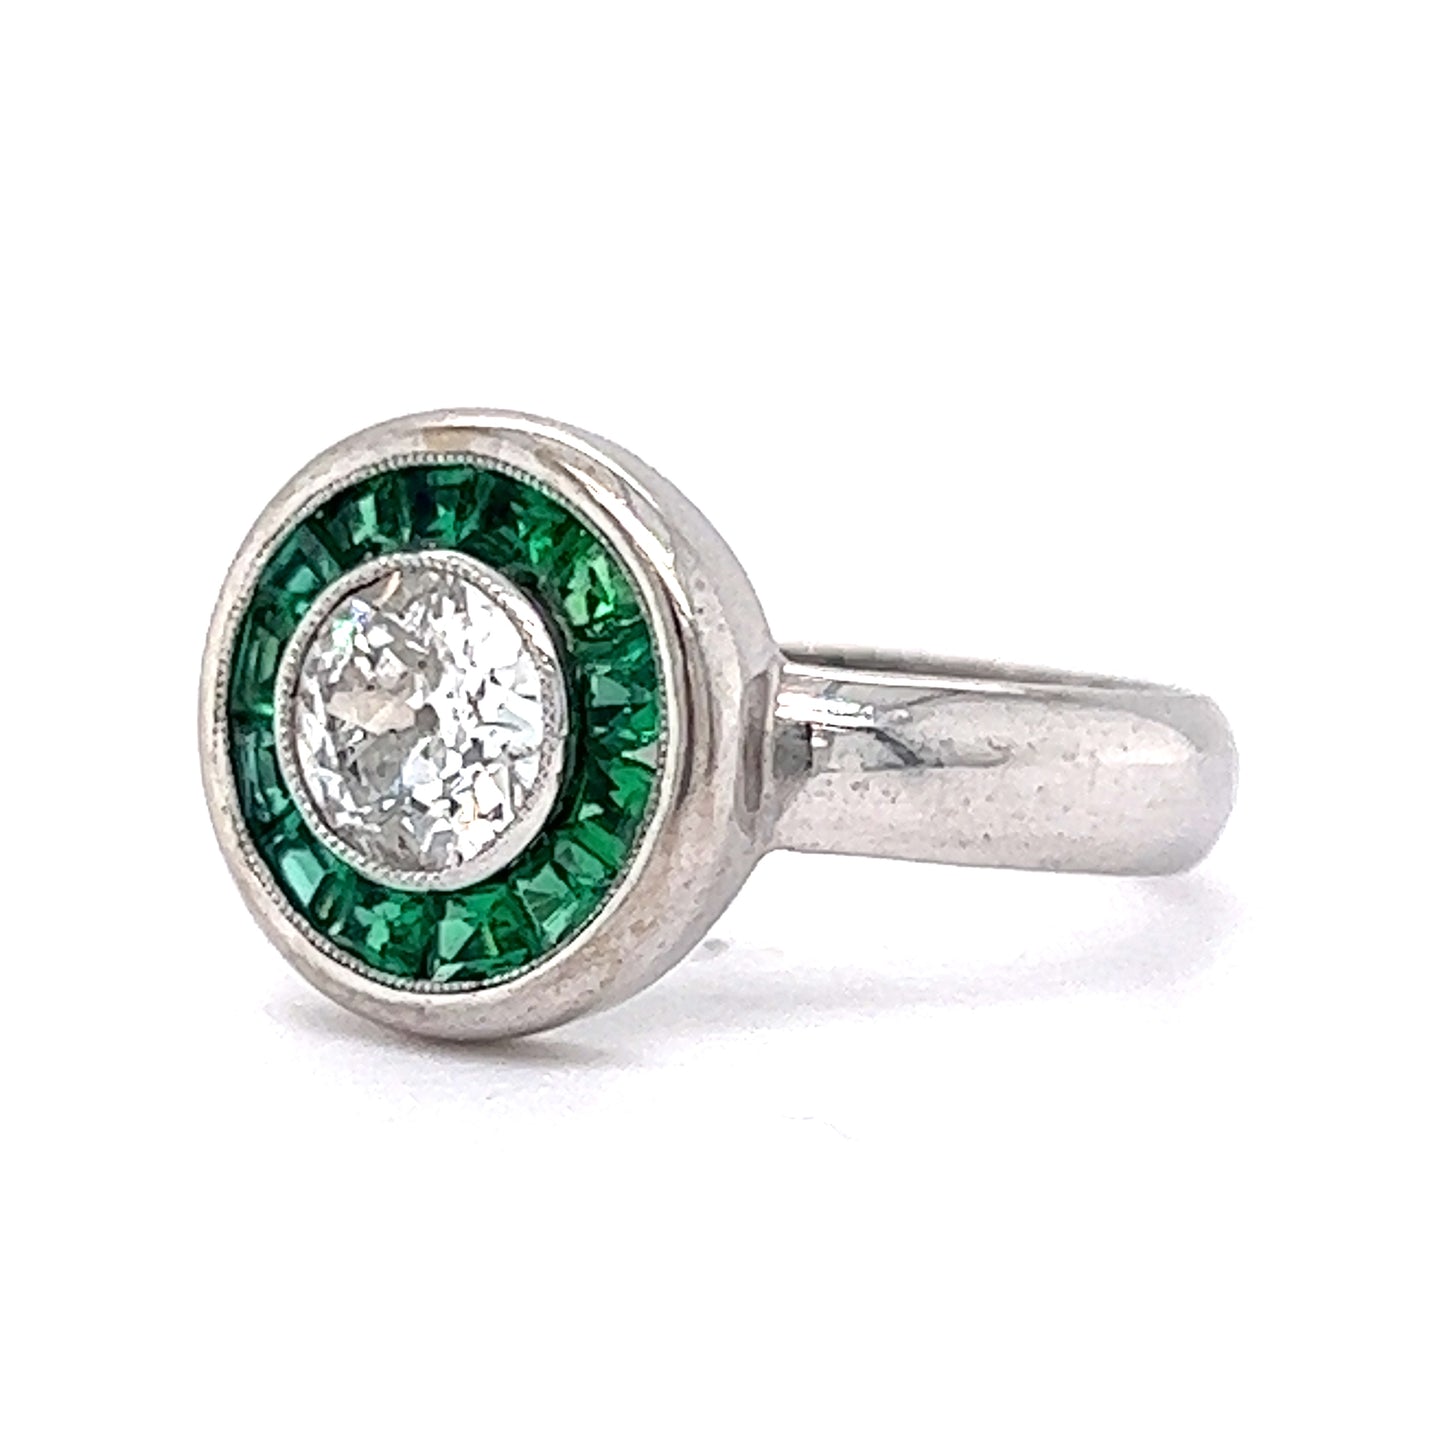 Antique Style Old European Cut Diamond w/ Emerald Halo Cocktail Ring 18k White Gold